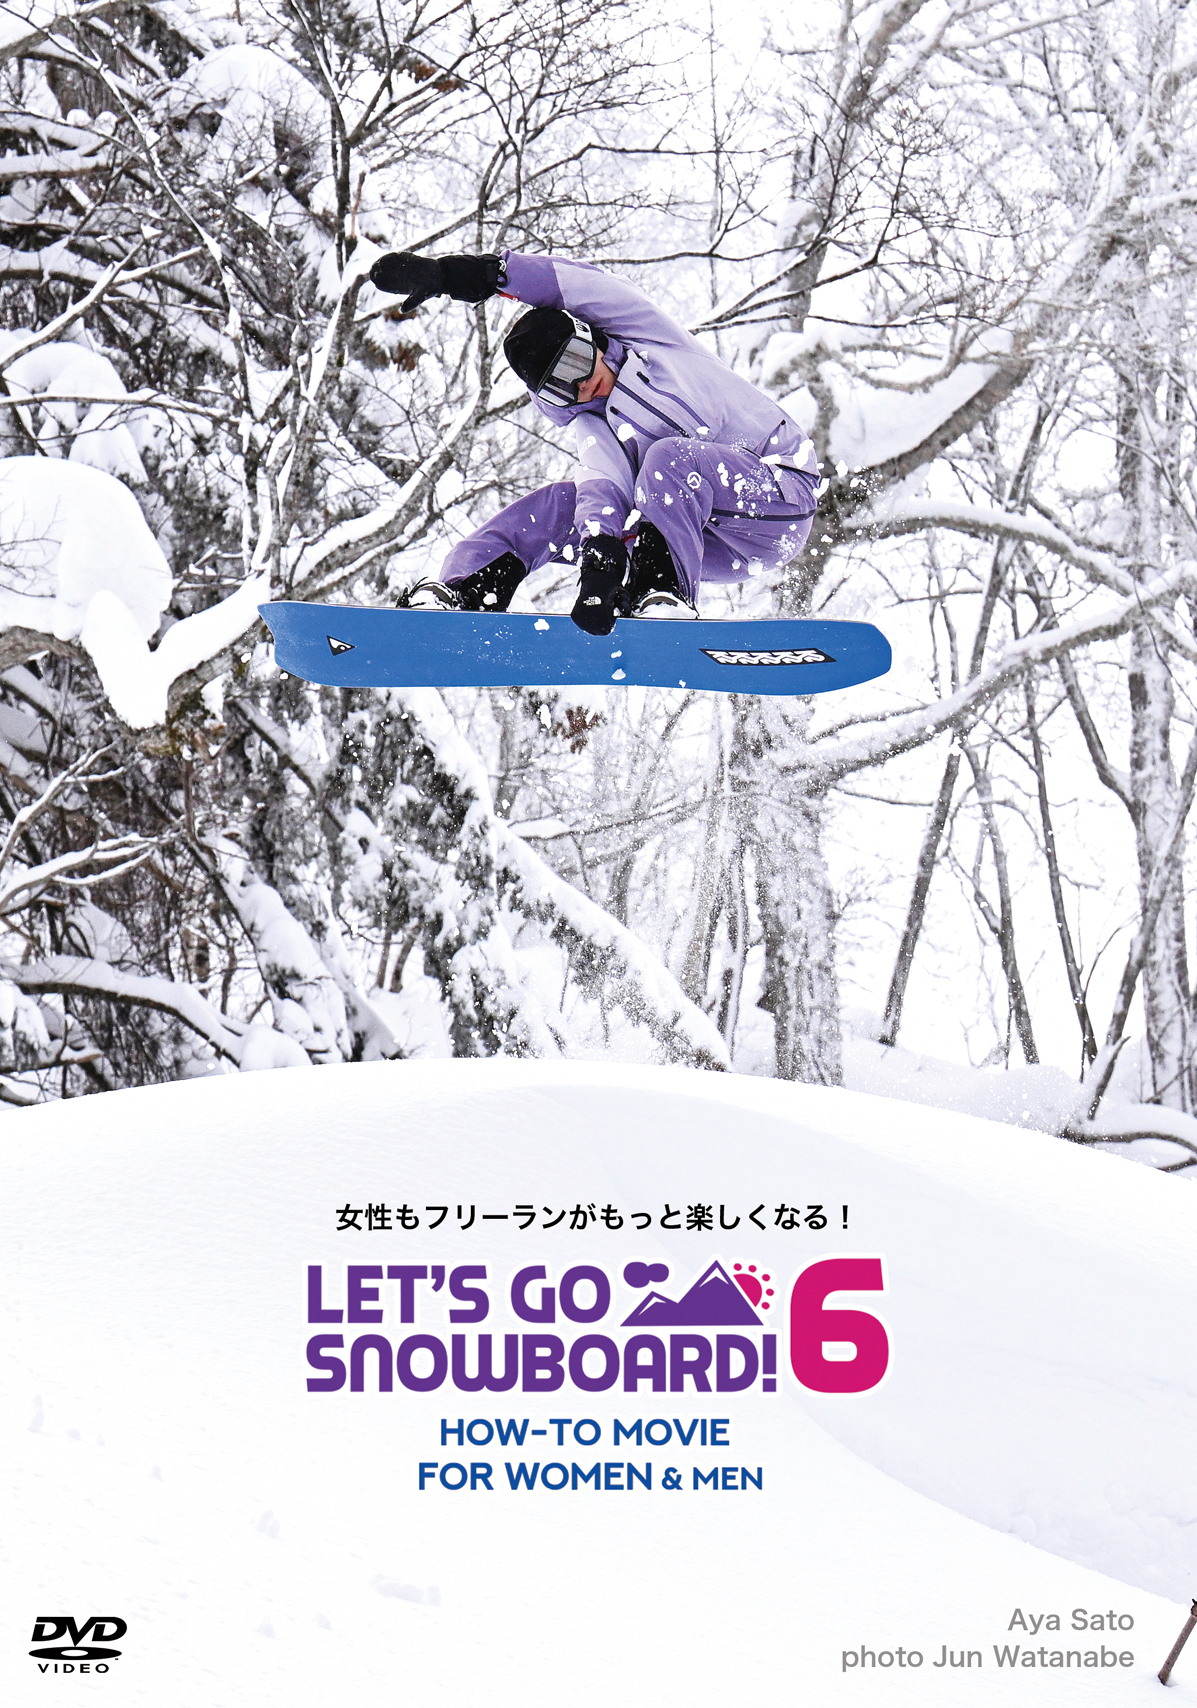  let's go- snowboard!6 is u two Movie foru- men & men 